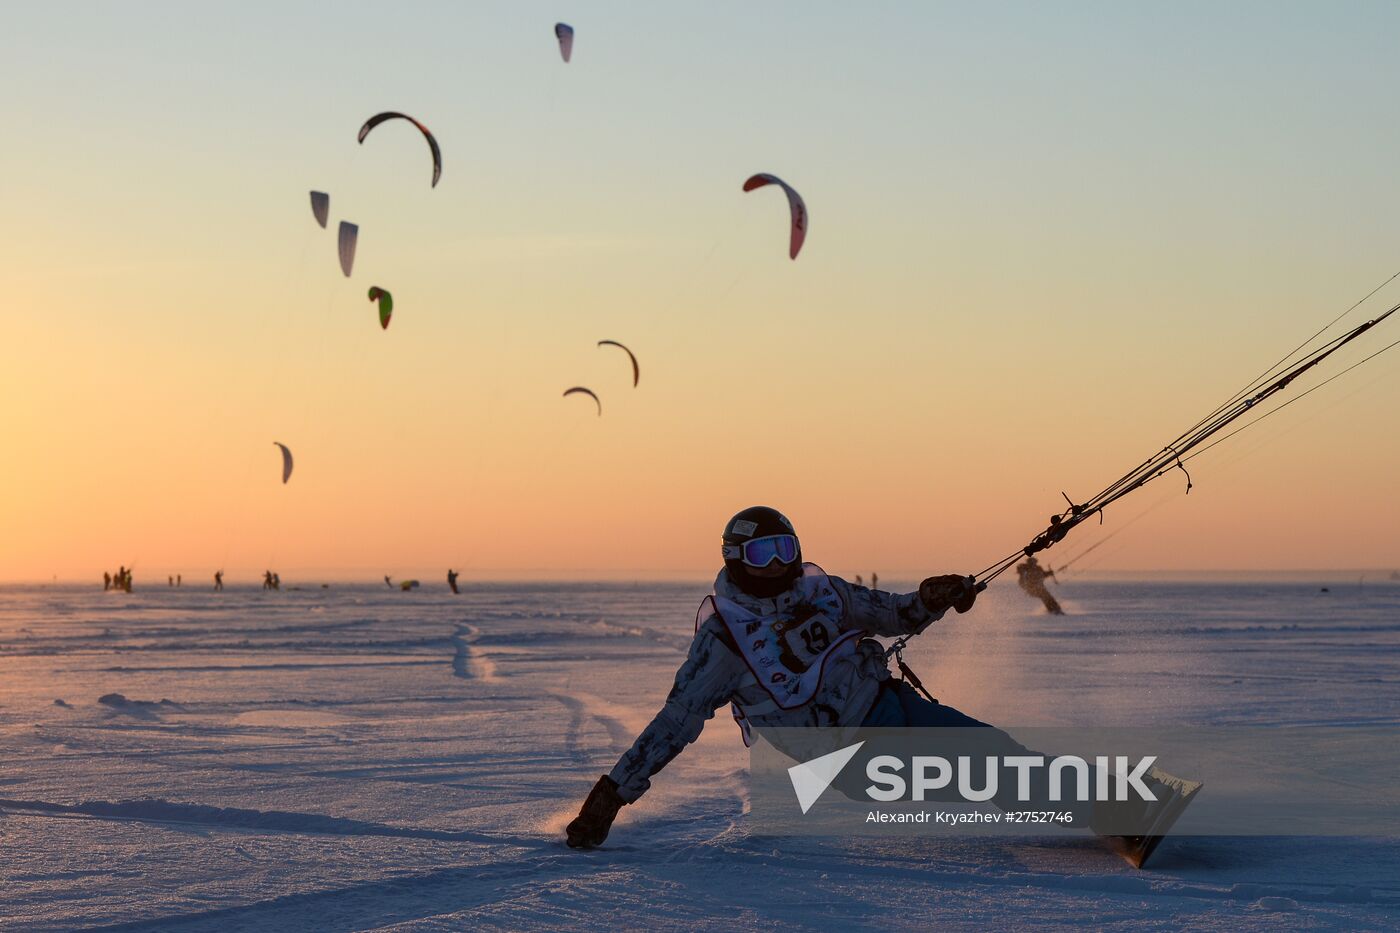 Siberian Kite Cup 2015